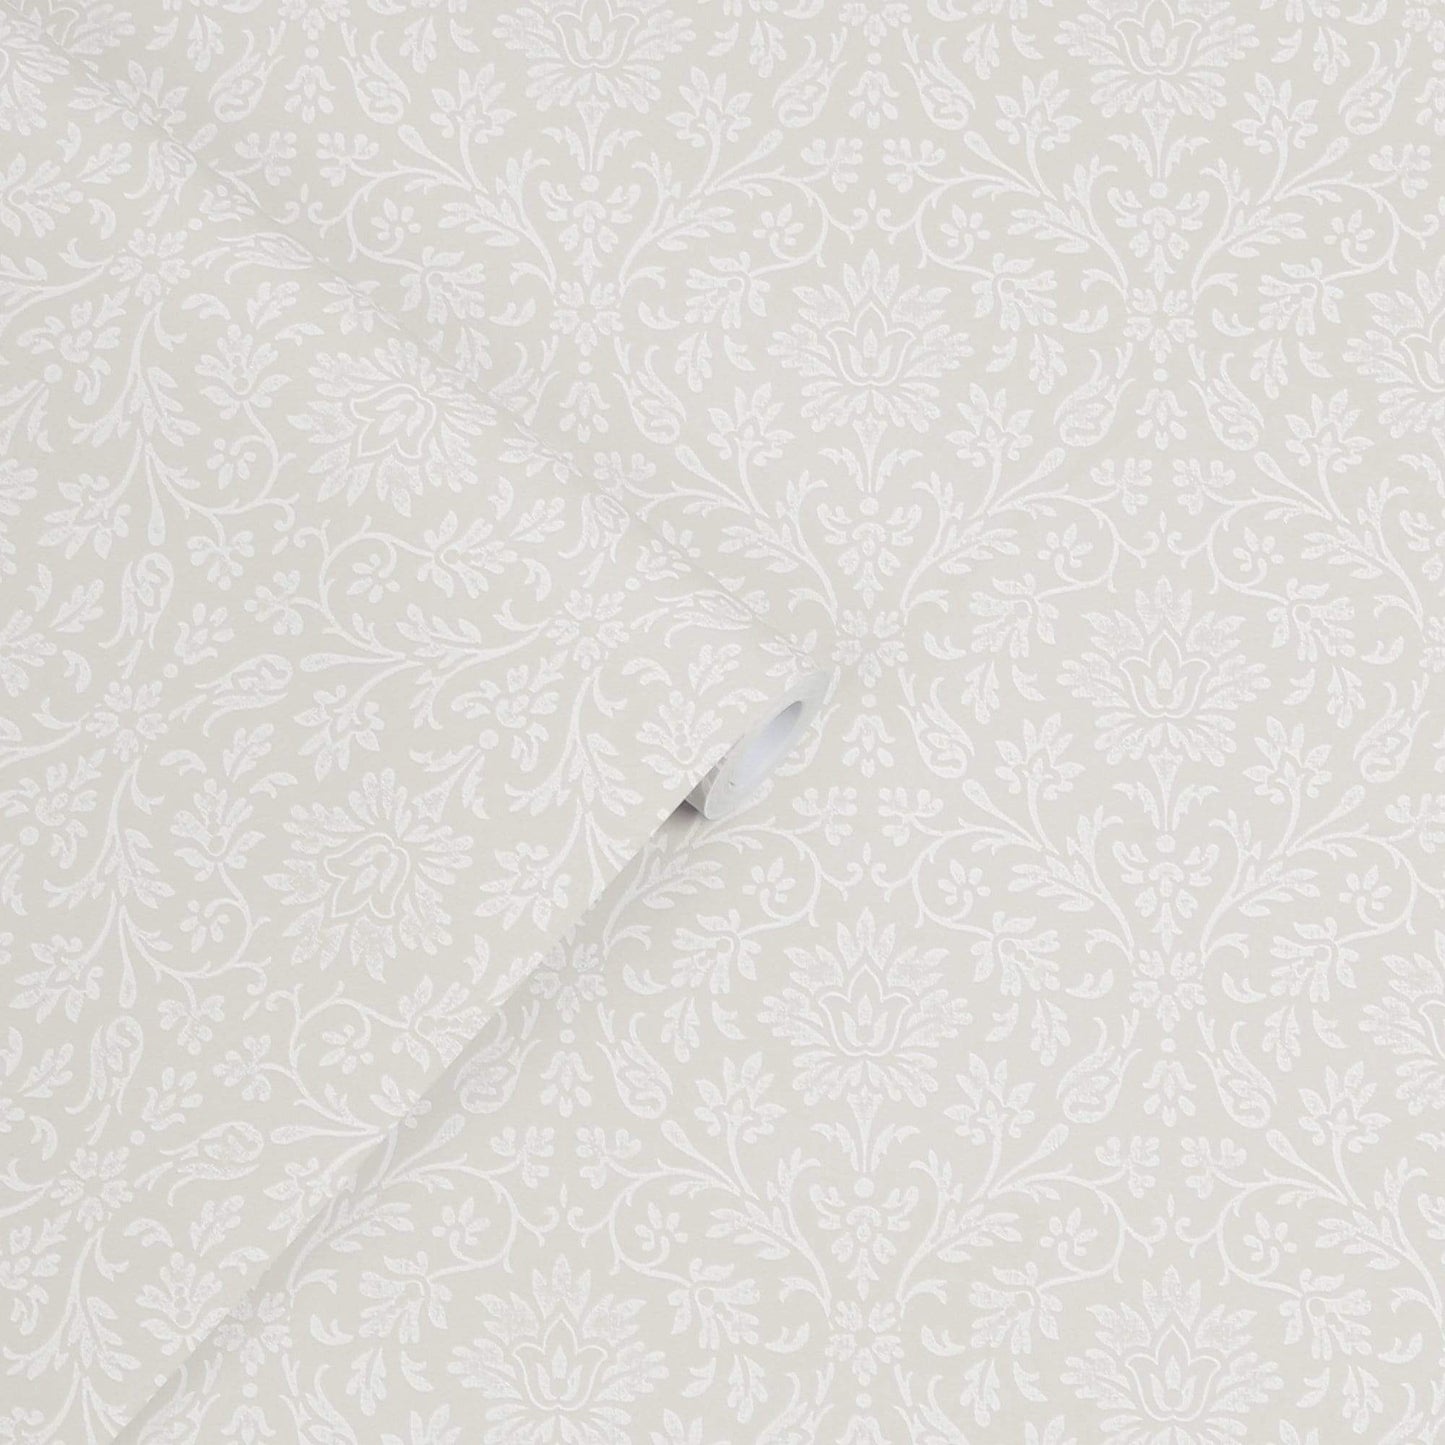 Wallpaper  -  Laura Ashley Annecy Dove Grey Wallpaper - 113369  -  60001900